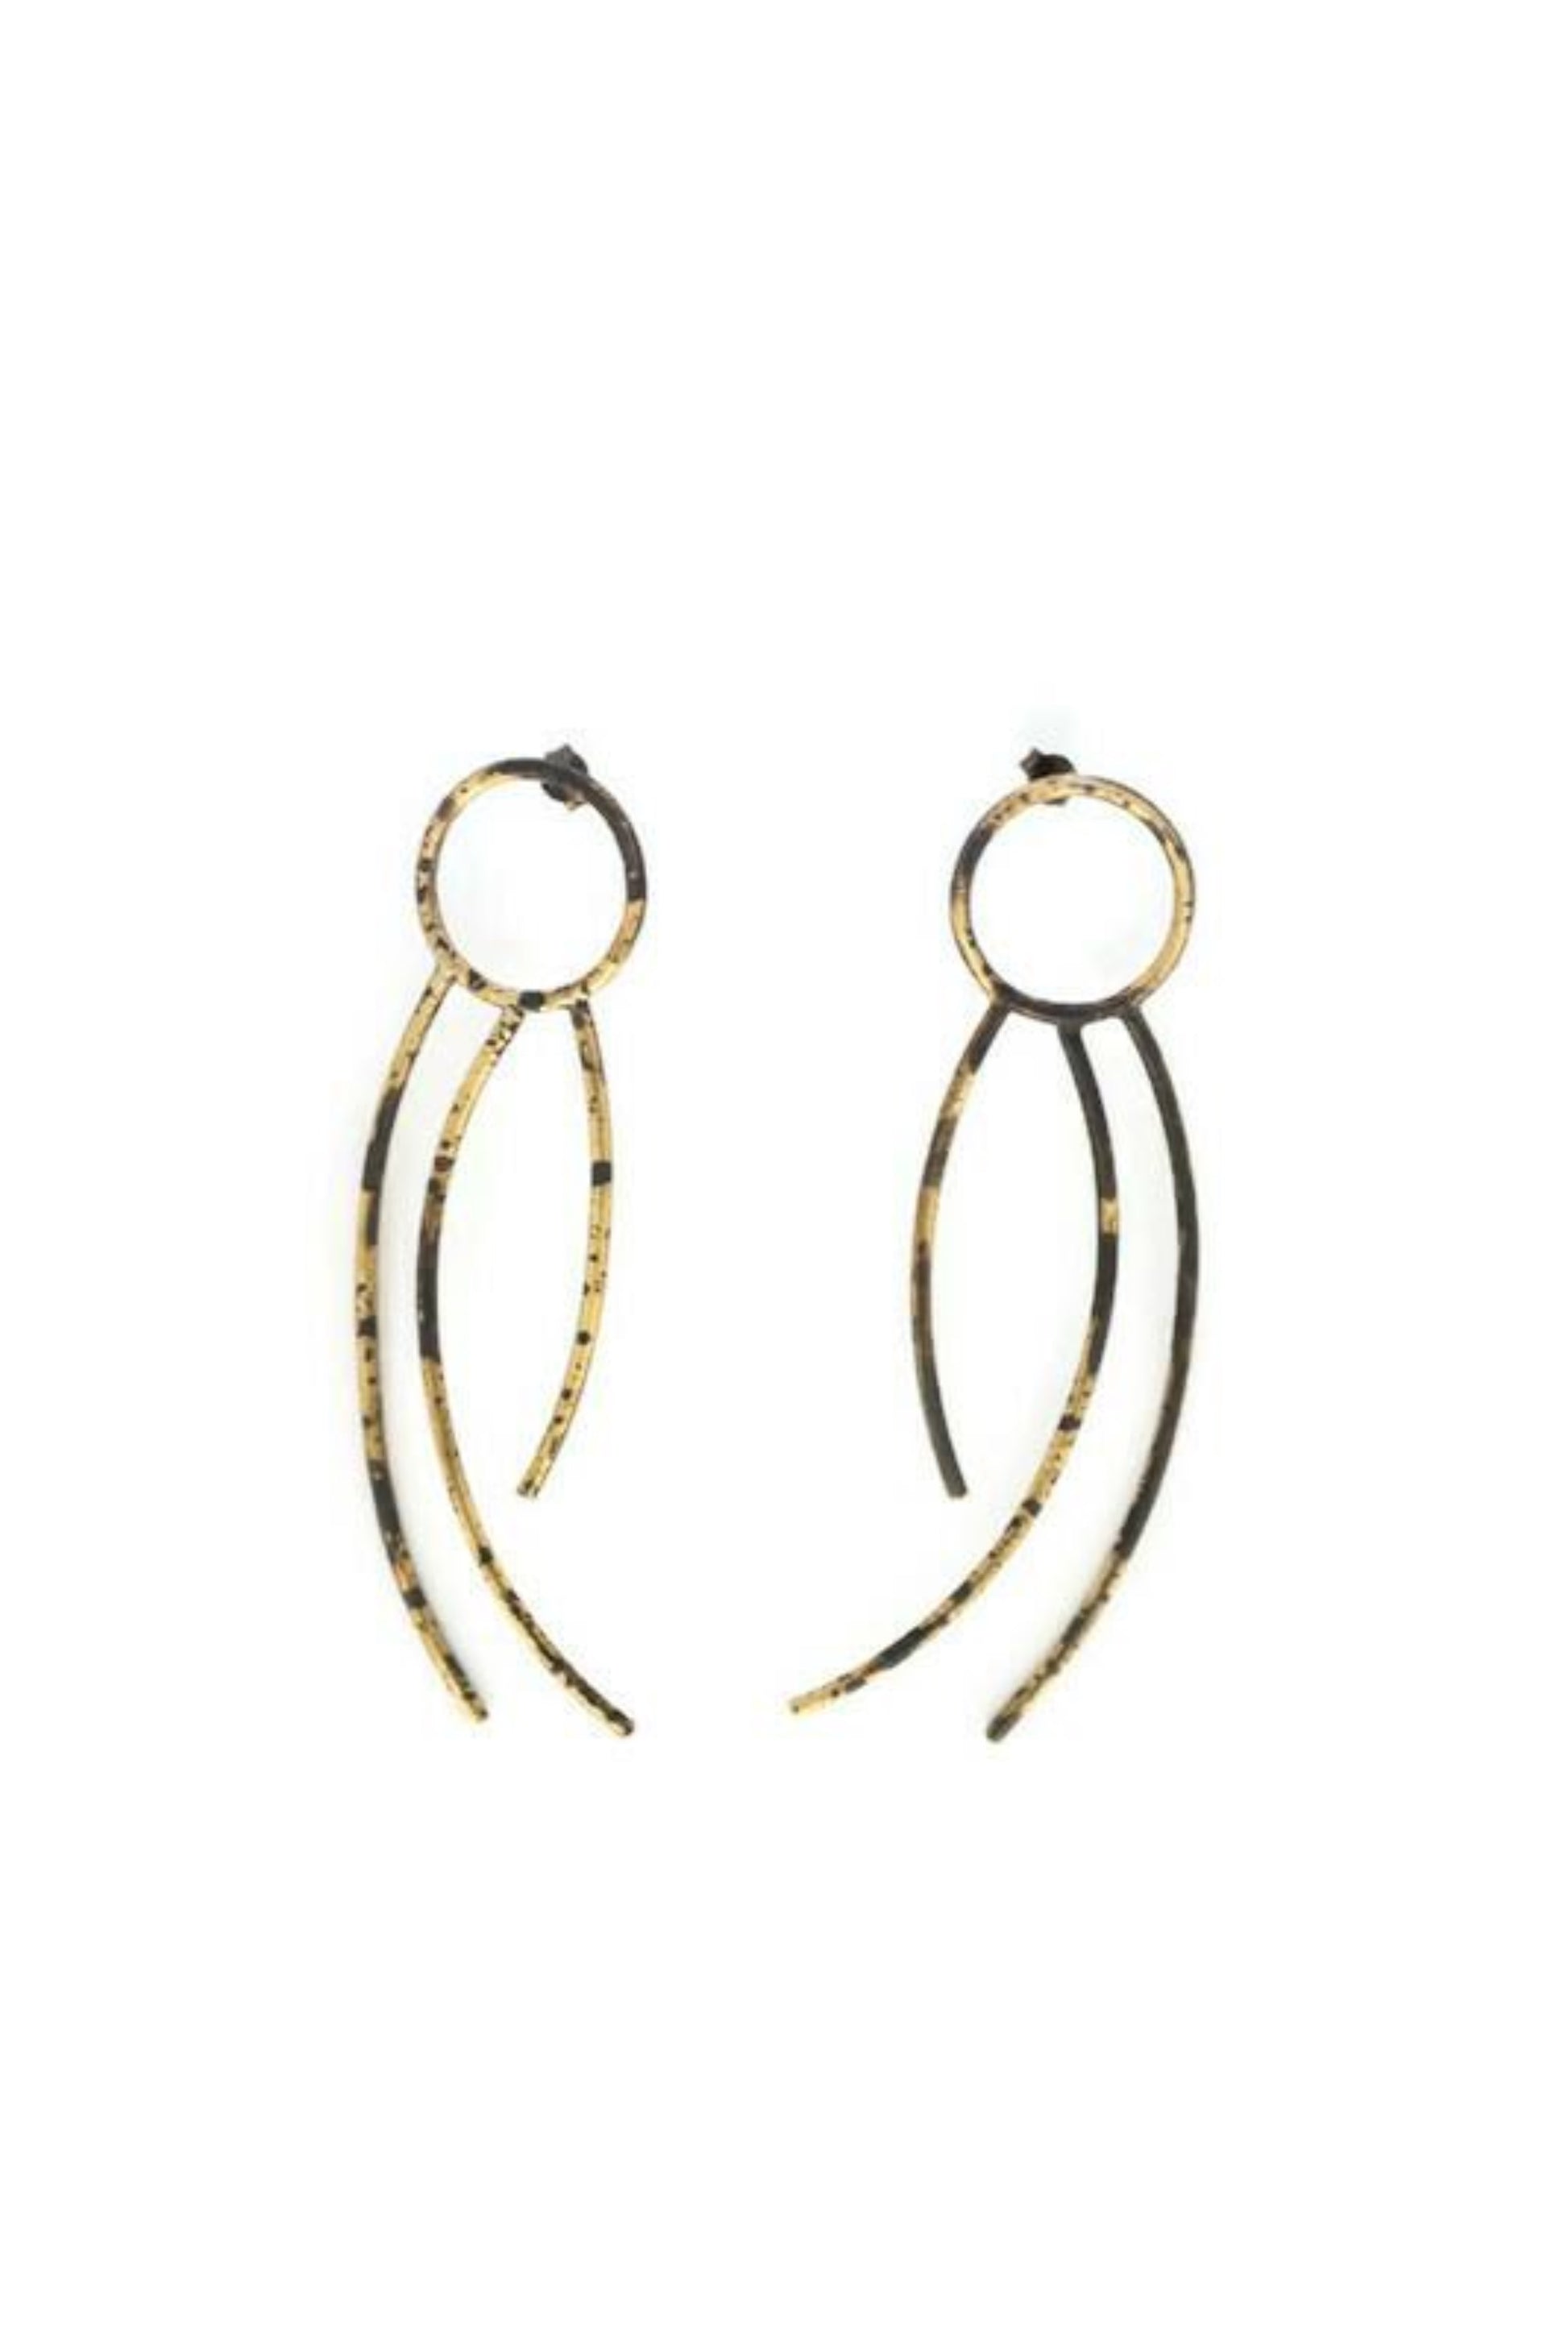 Oxidised Brass earrings | Yellow - Black Dancer Cycles Earrings - CURIUDO